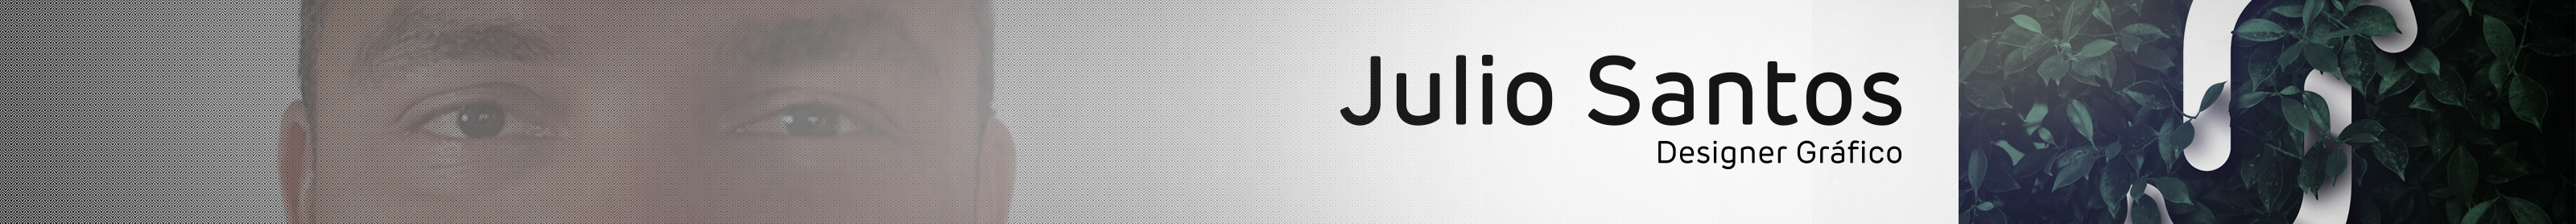 JULIO SANTOS's profile banner